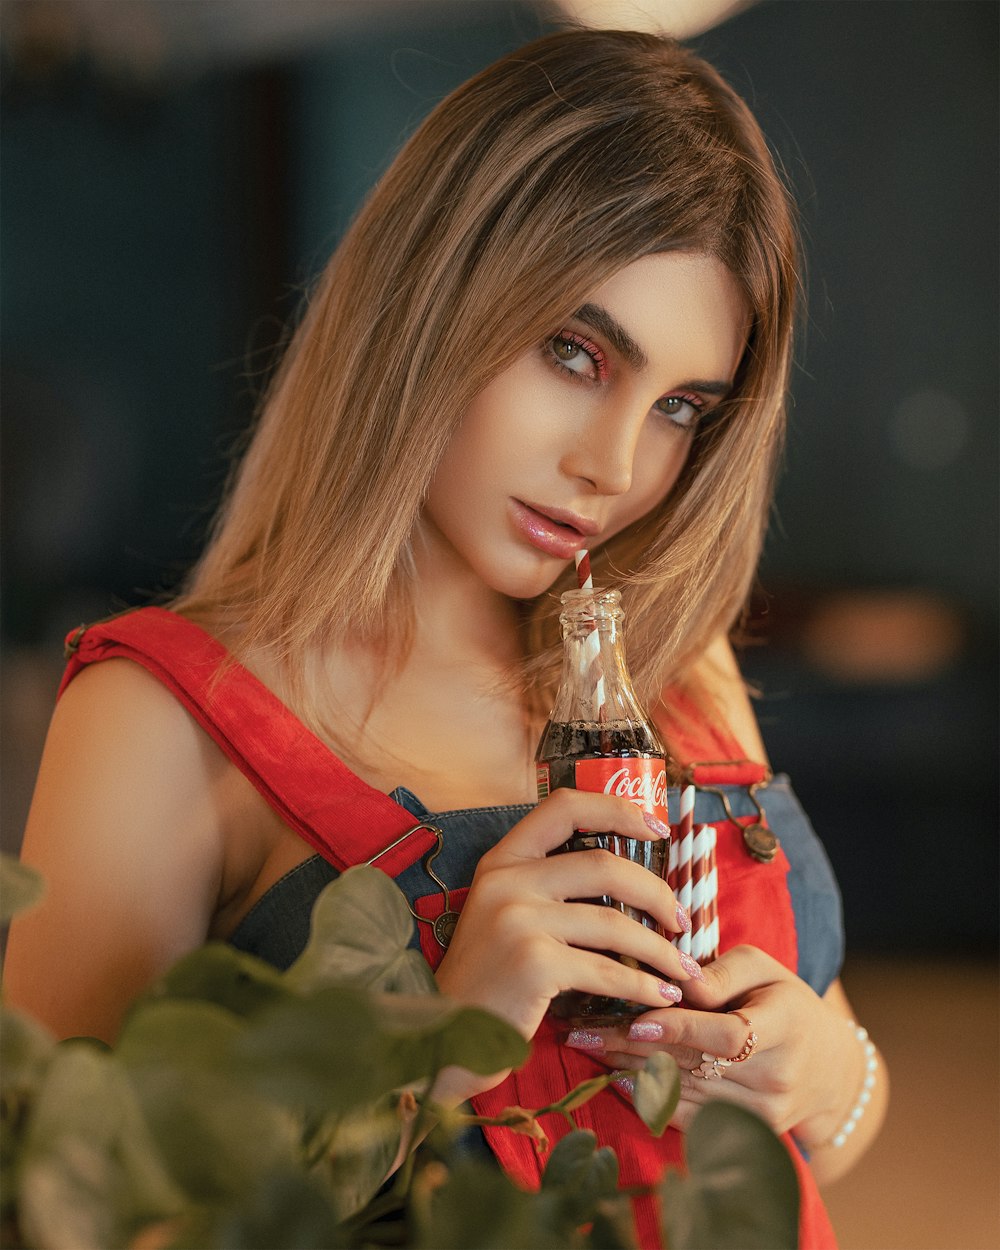 woman holding Coca-Cola soda bottle